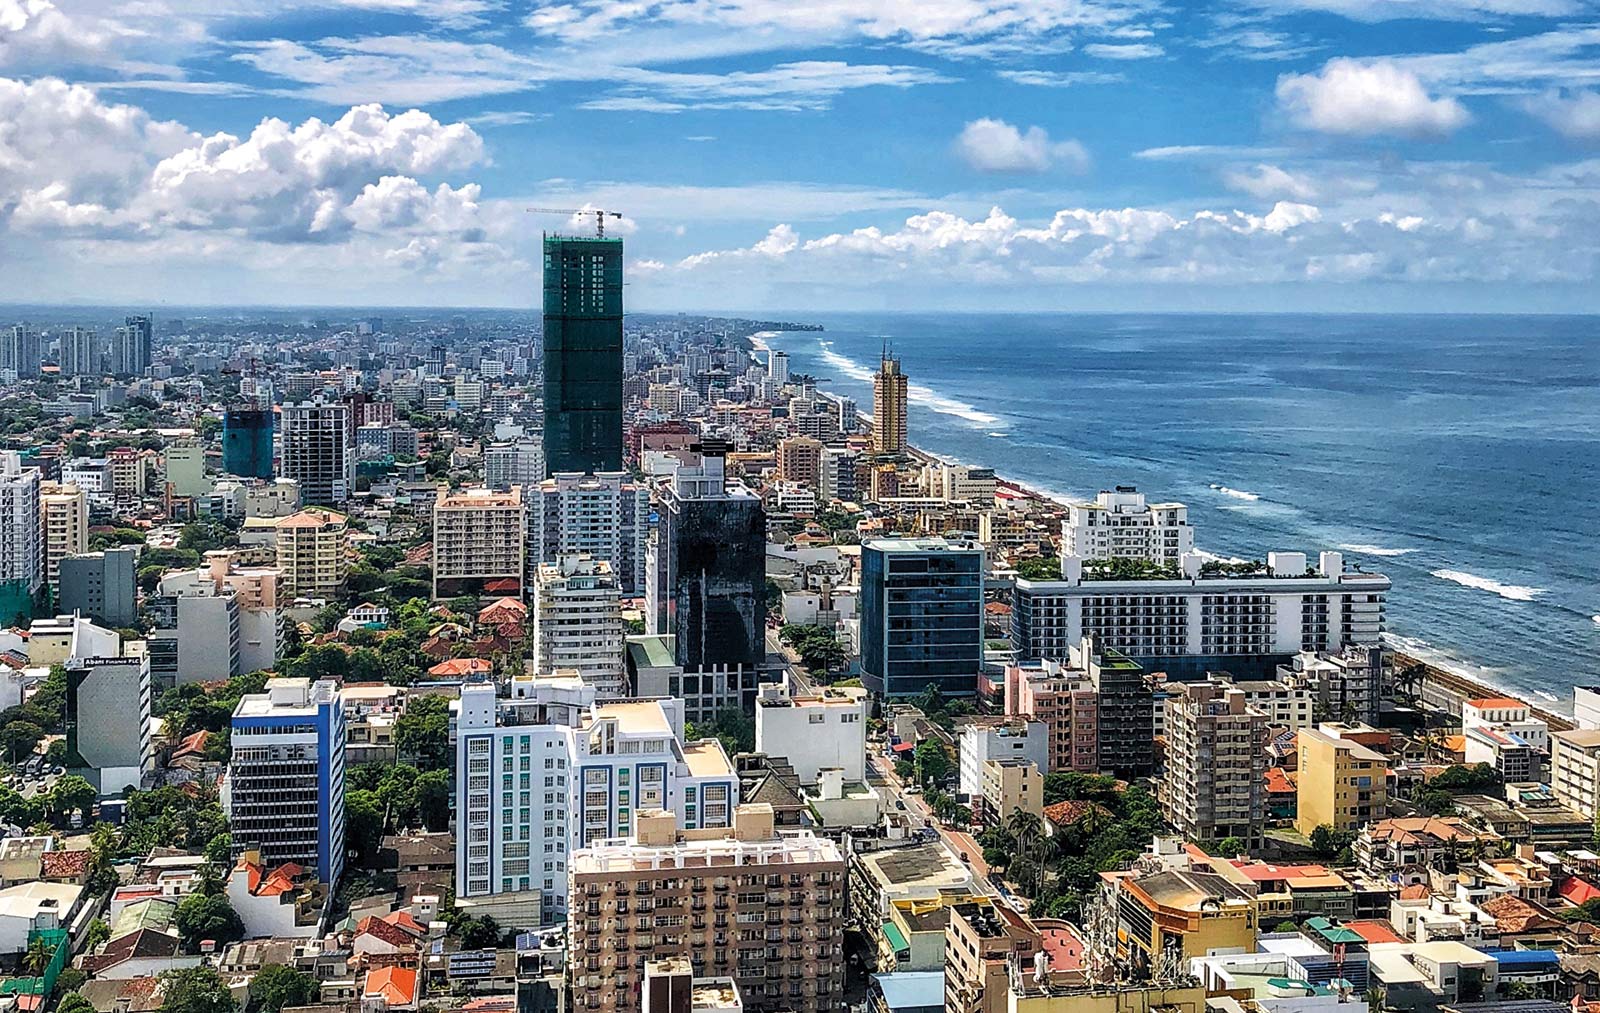 City of Colombo, Sri Lanka